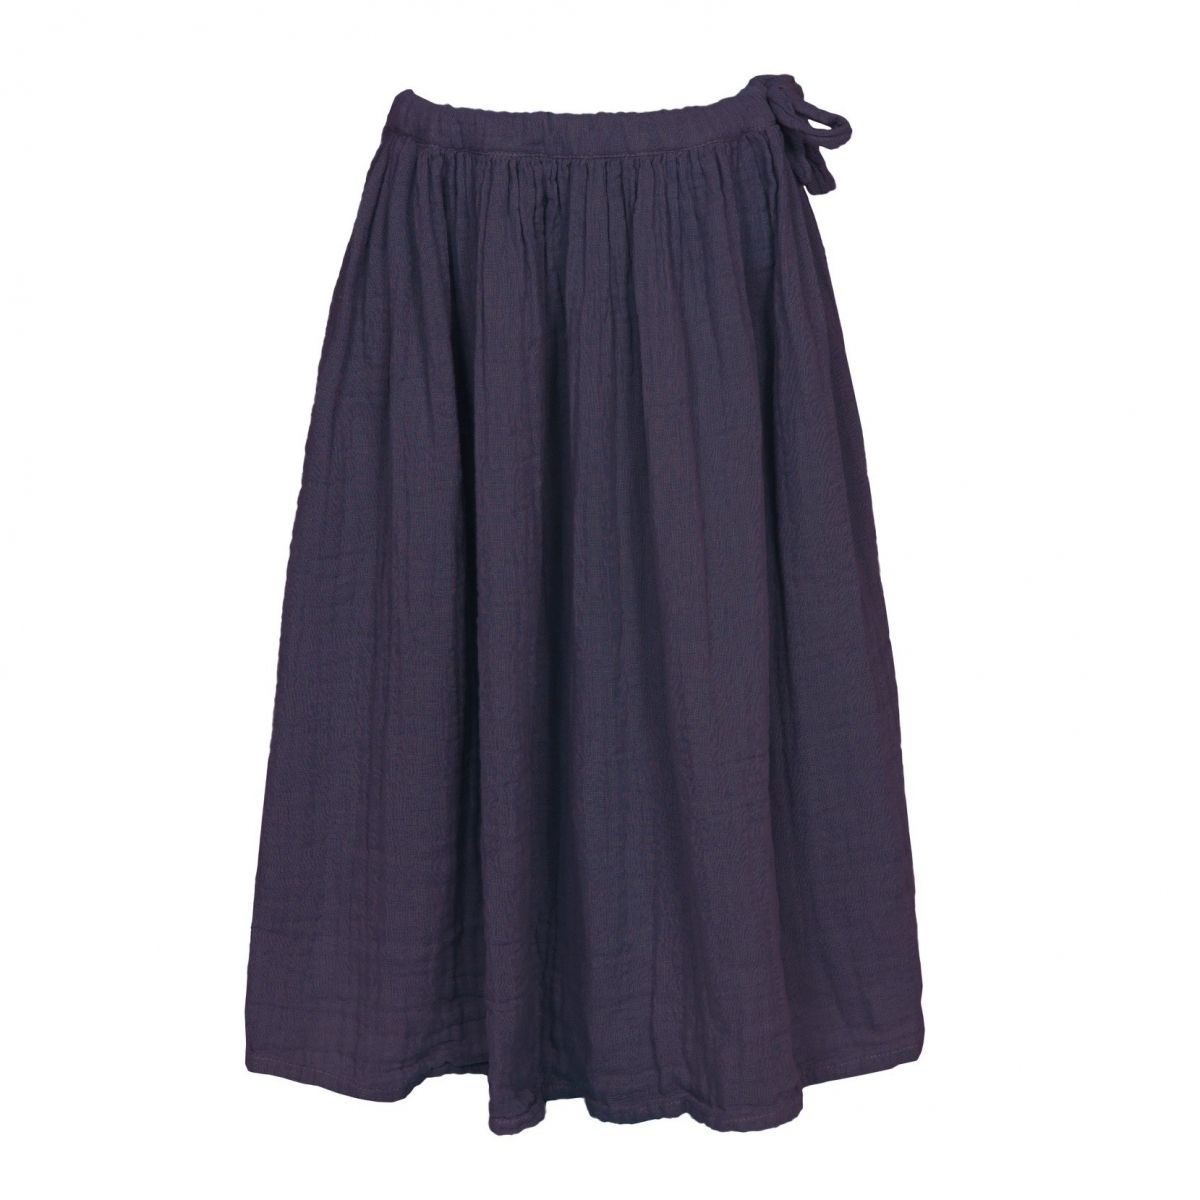 Numero 74 - Skirt for girls Ava long sweet aubergine - Faldas y